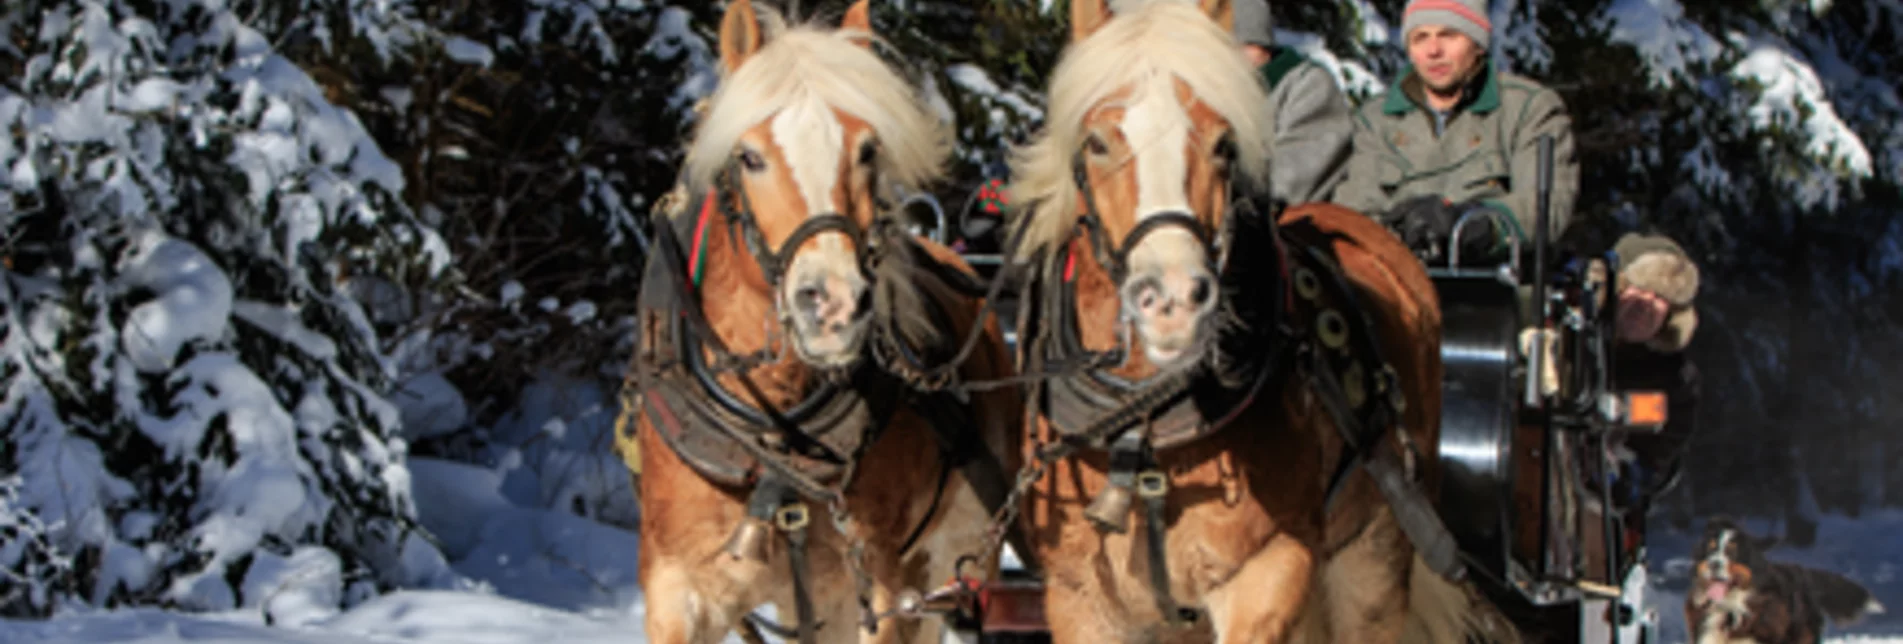 Horse Carriage Ride Abelhof  - Touren-Impression #1